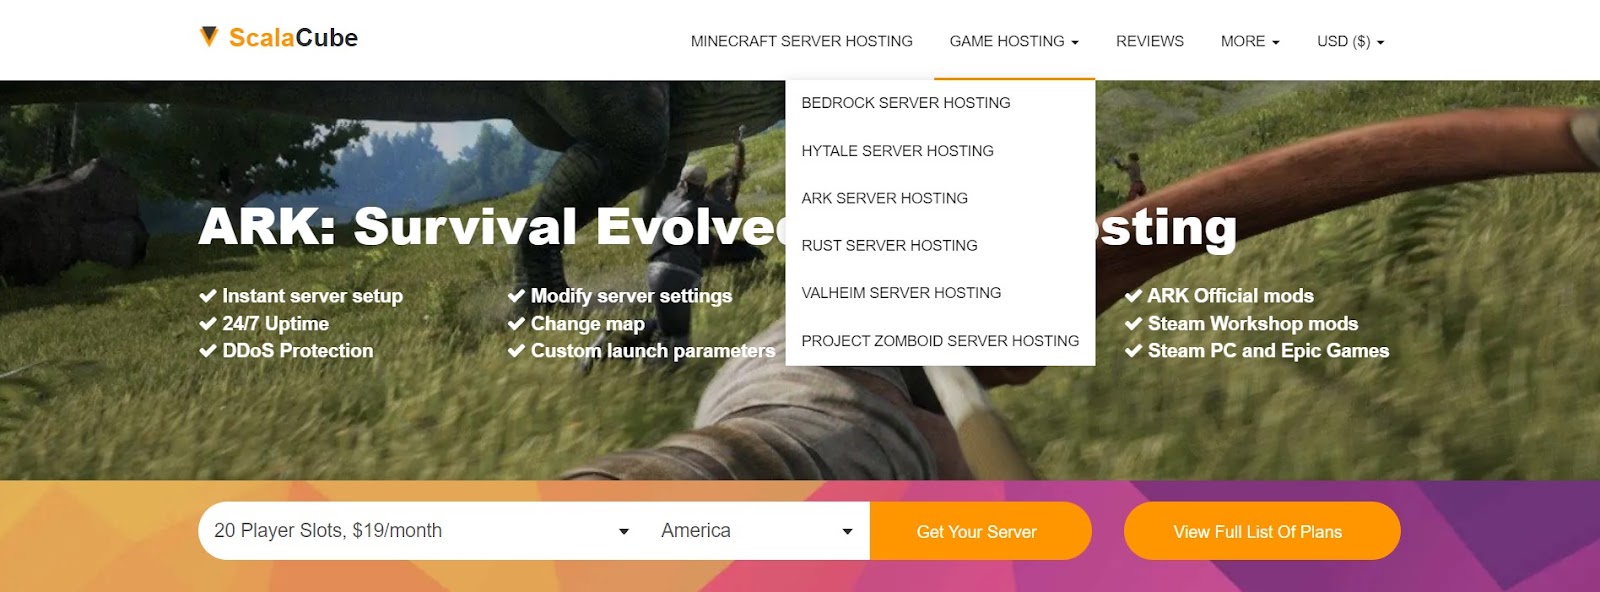 ScalaCube ARK: Survival Evolved game server hosting landing page.